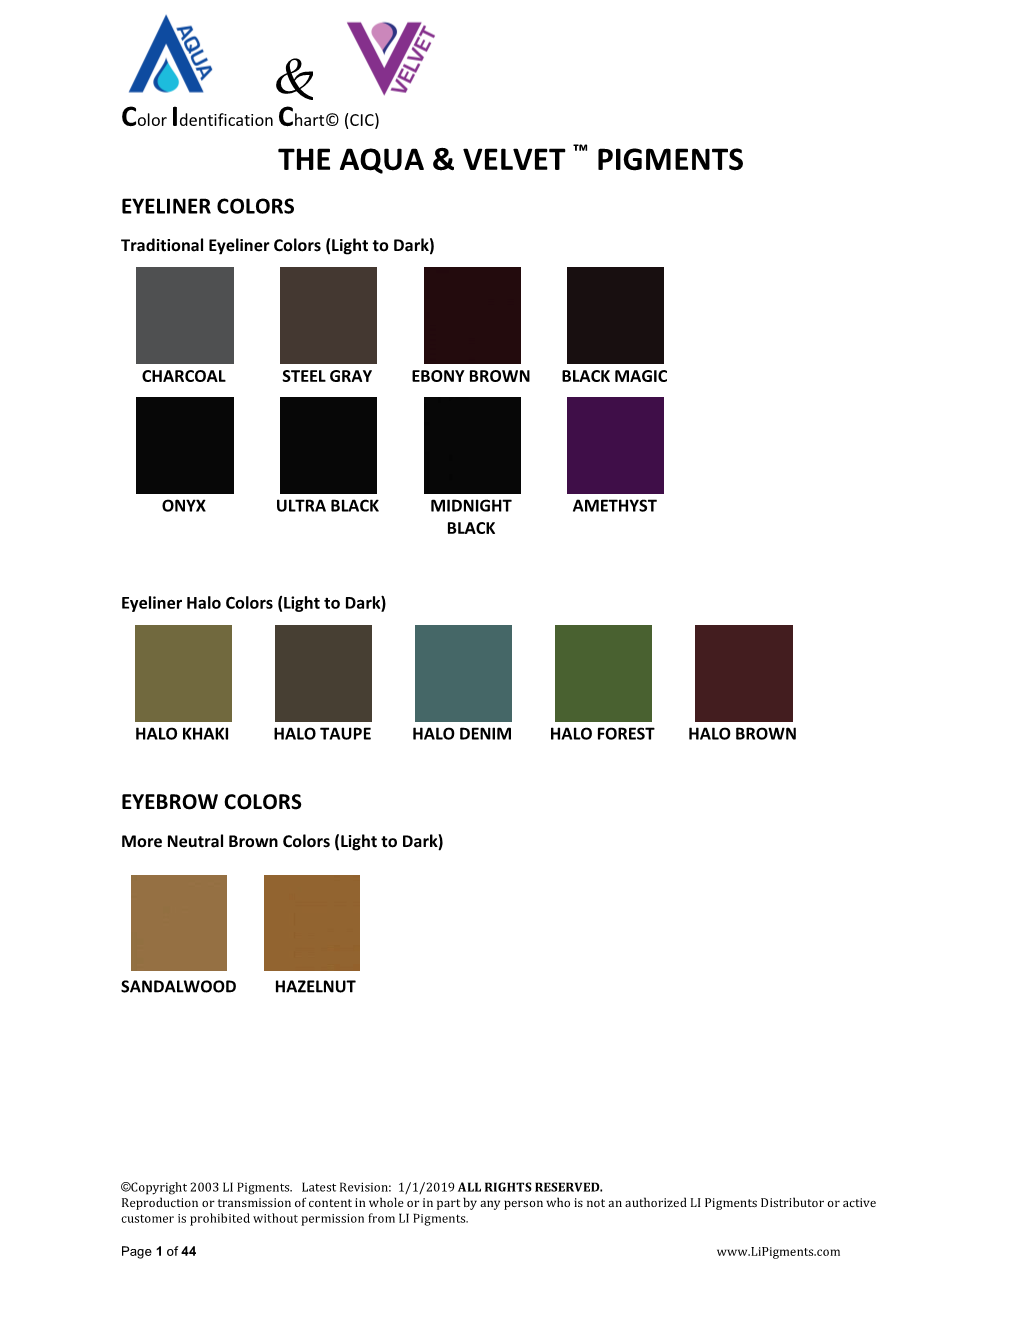 The Aqua & Velvet ™ Pigments